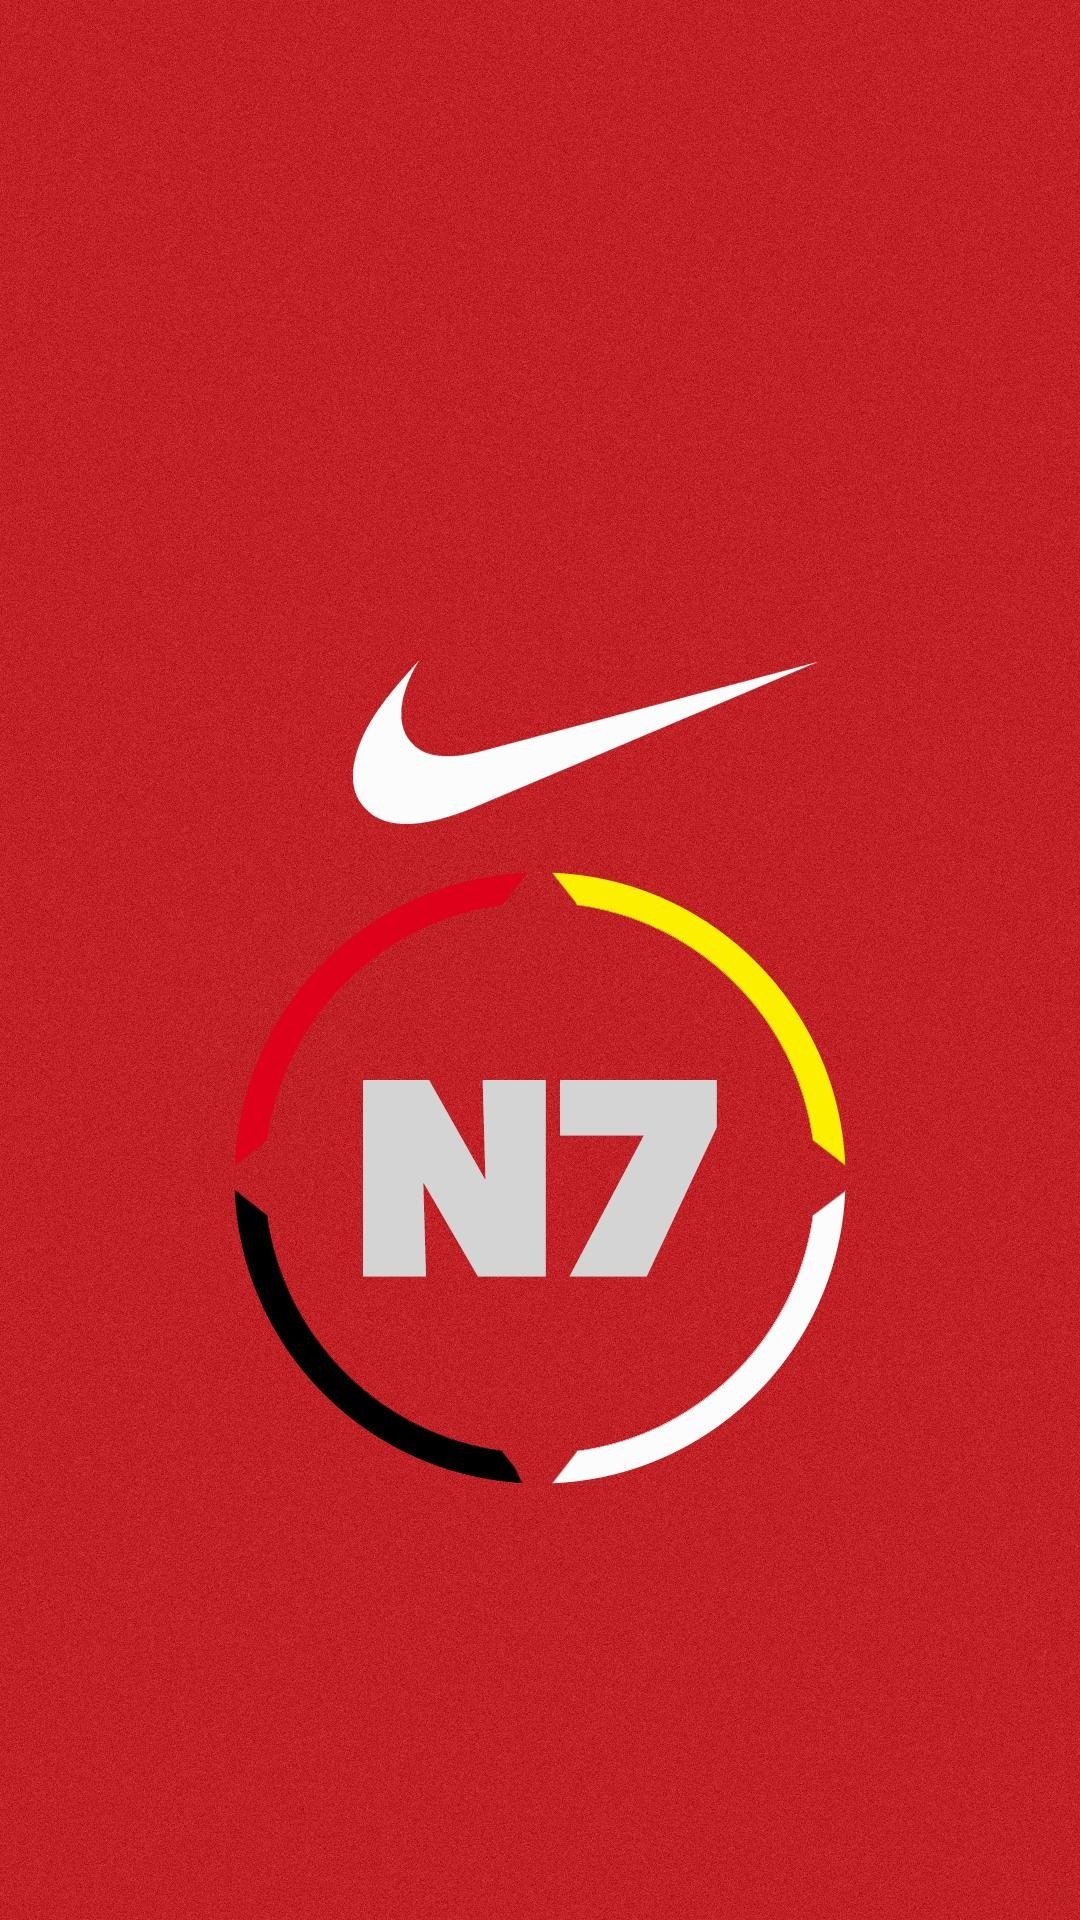 iPhone Nike Wallpaper HD 78 Image Design Wallpaper & Background Download